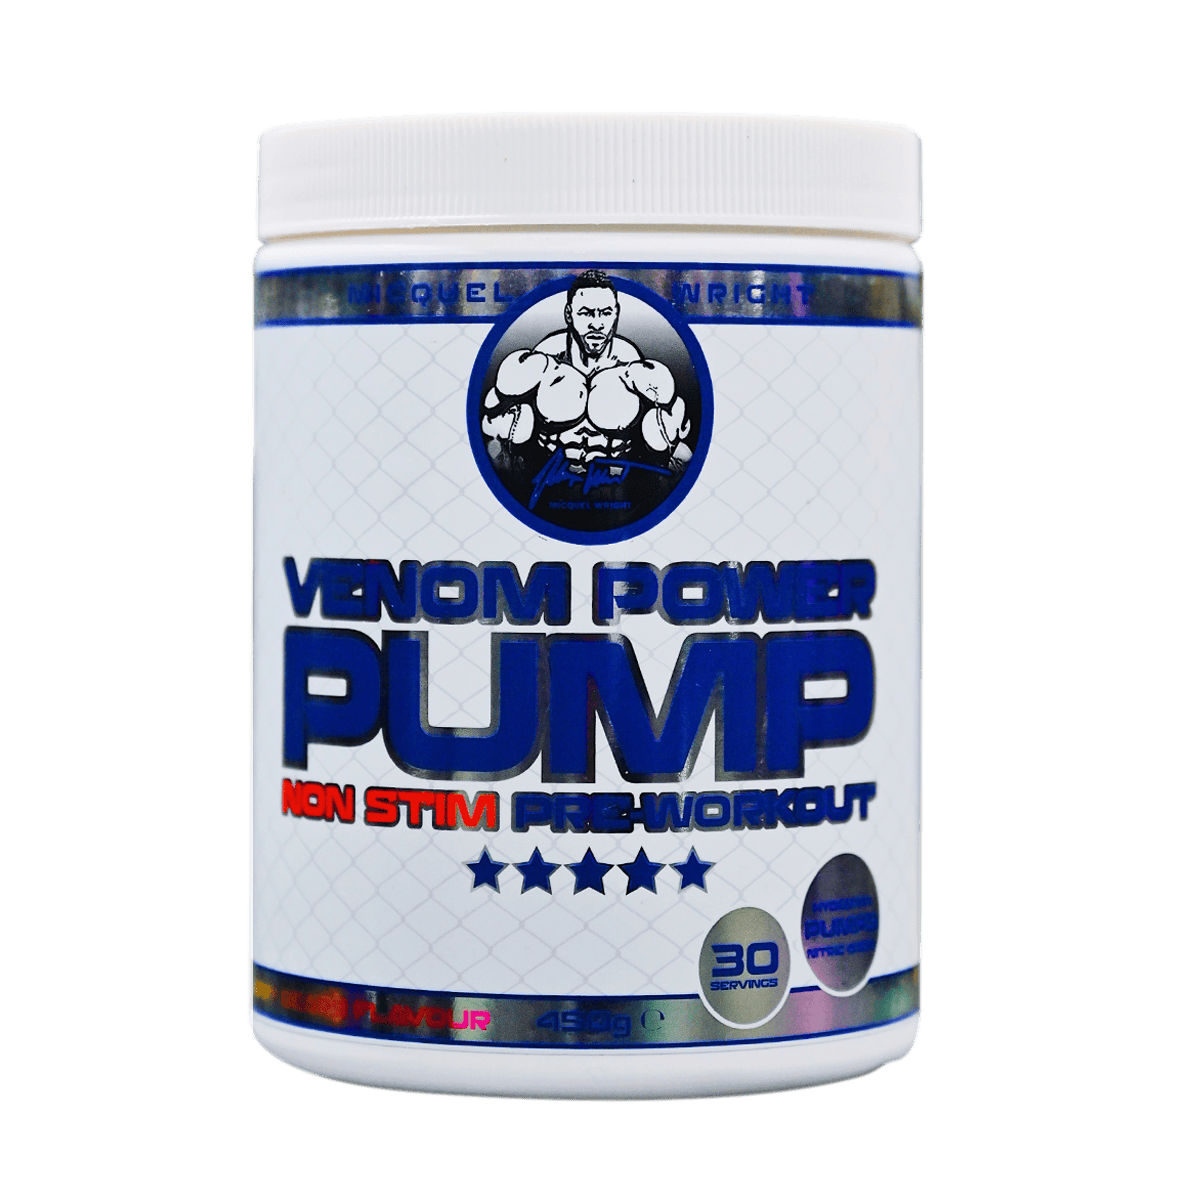 Venom Power PUMP Pre Workout